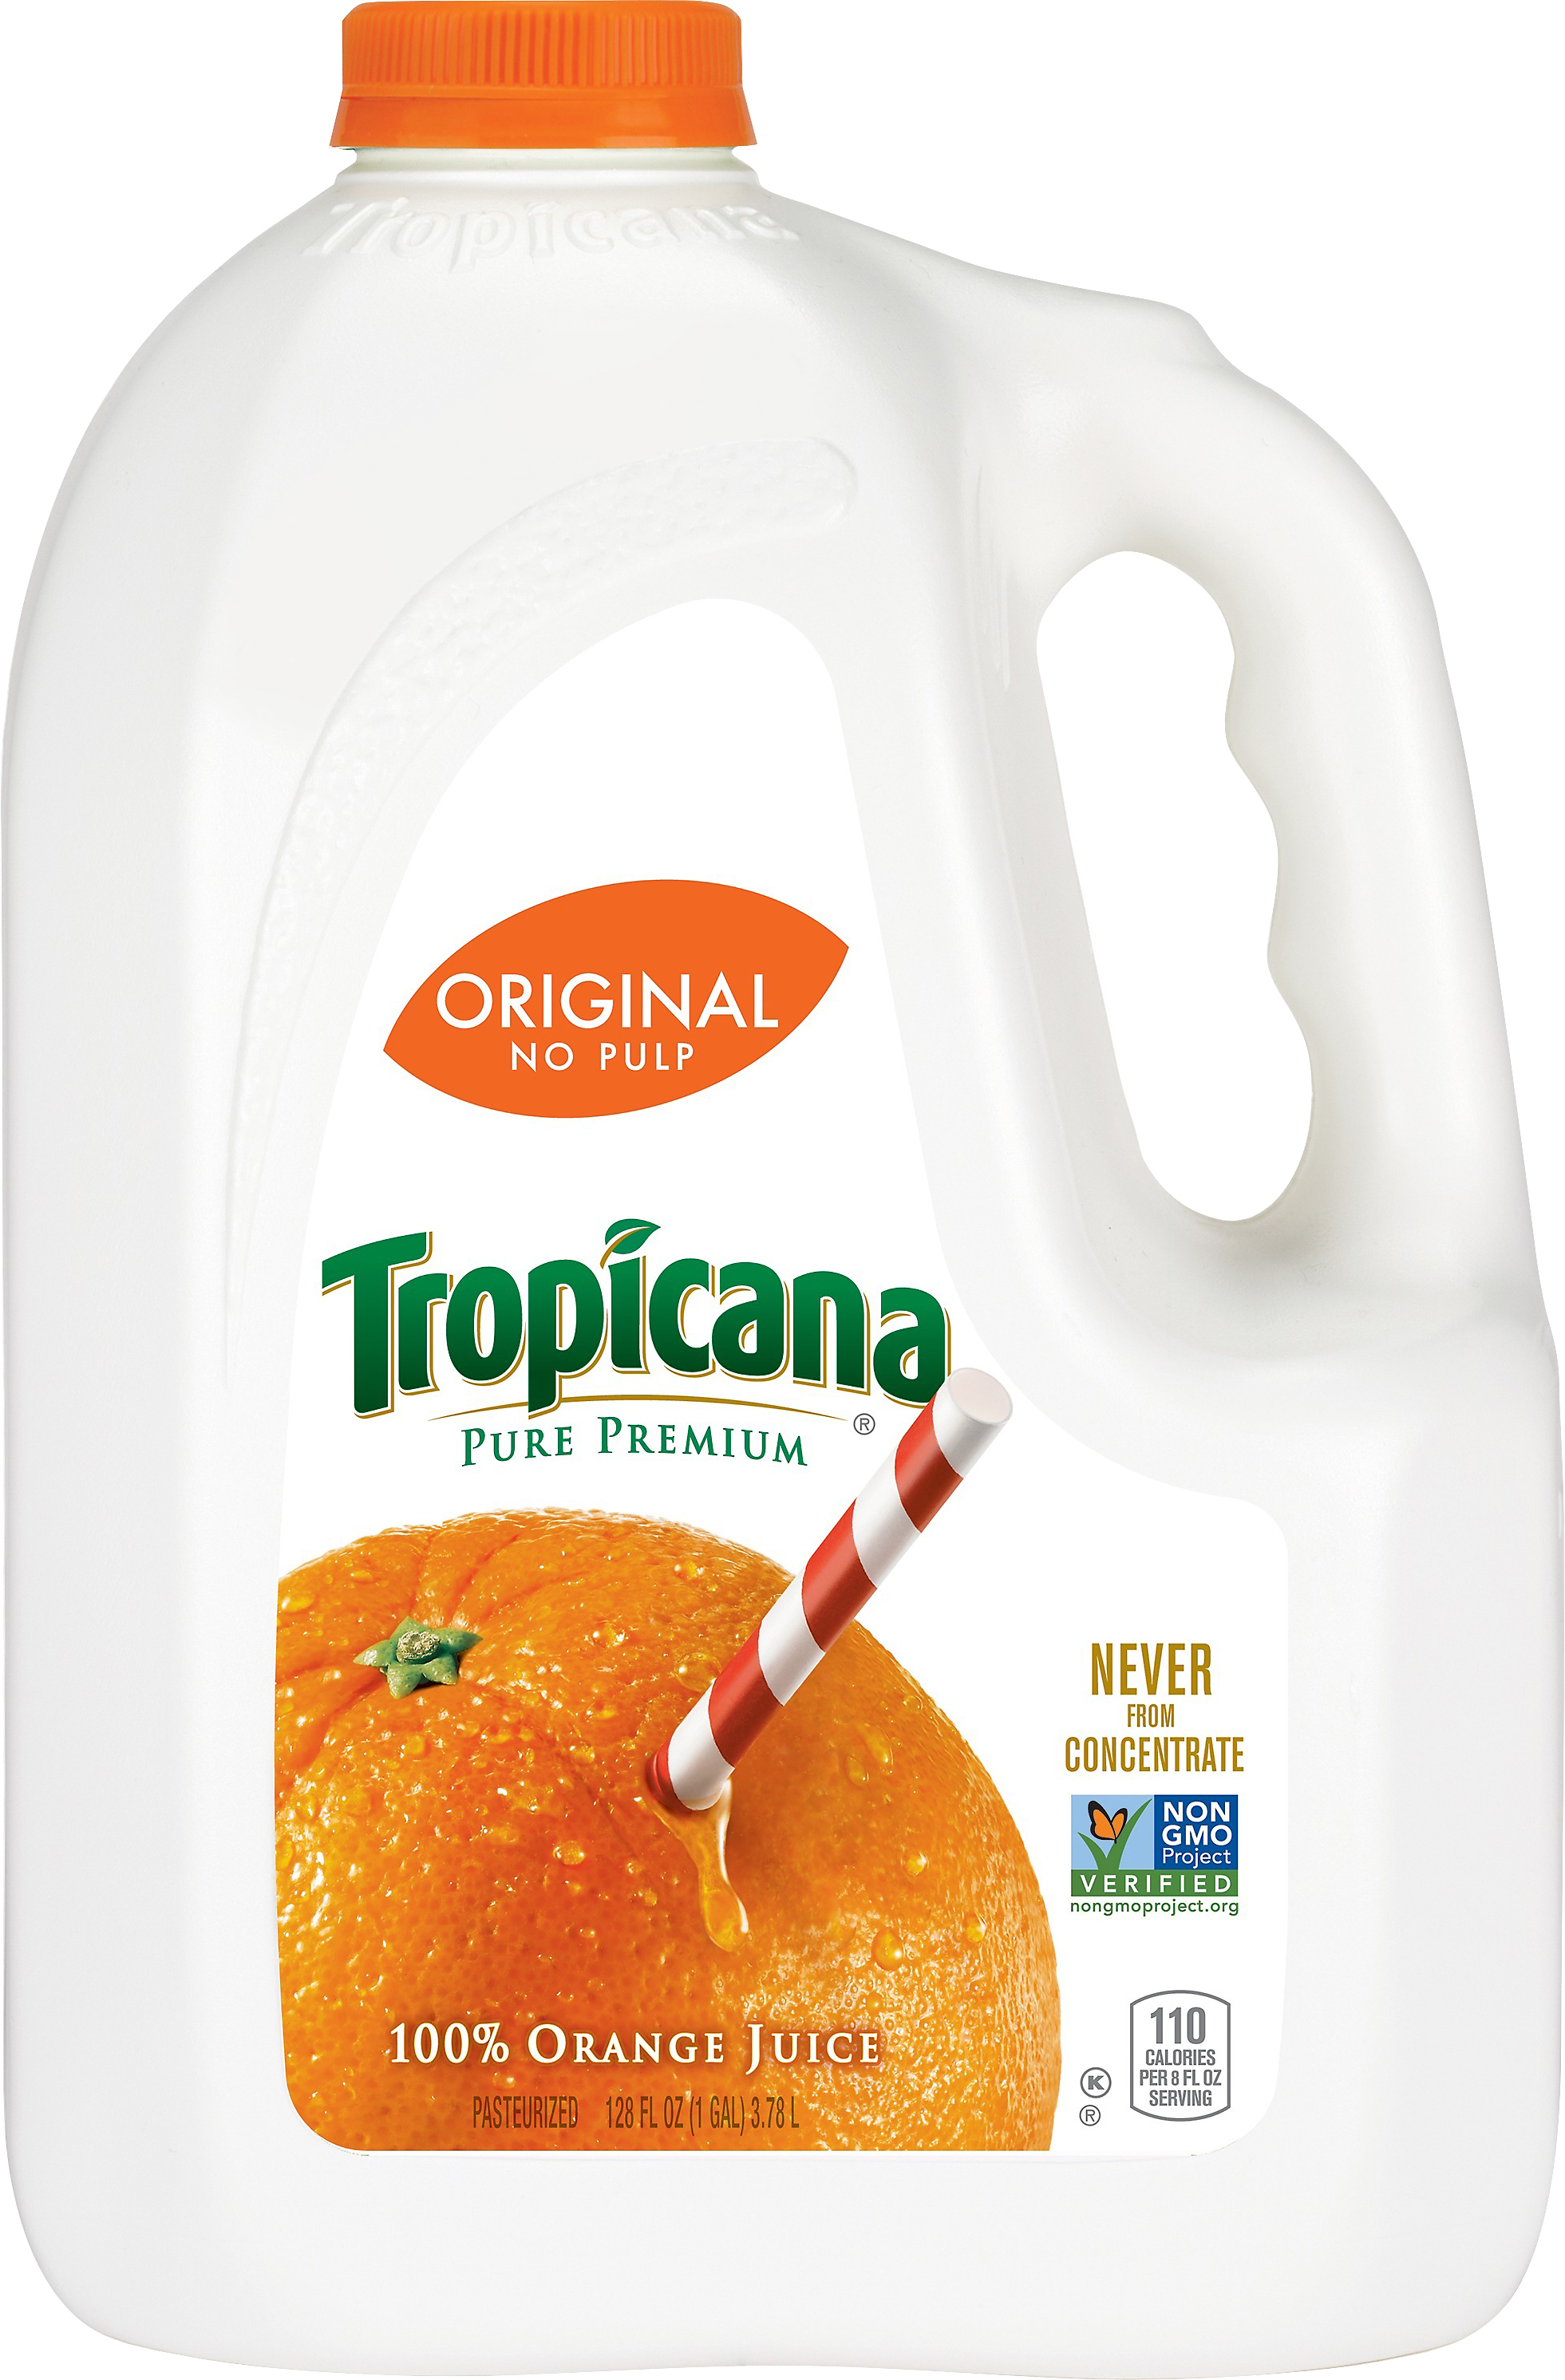 Tropicana Pure Premium 100% Orange Juice Original No Pulp 128 Fl Oz Jug - image 1 of 3